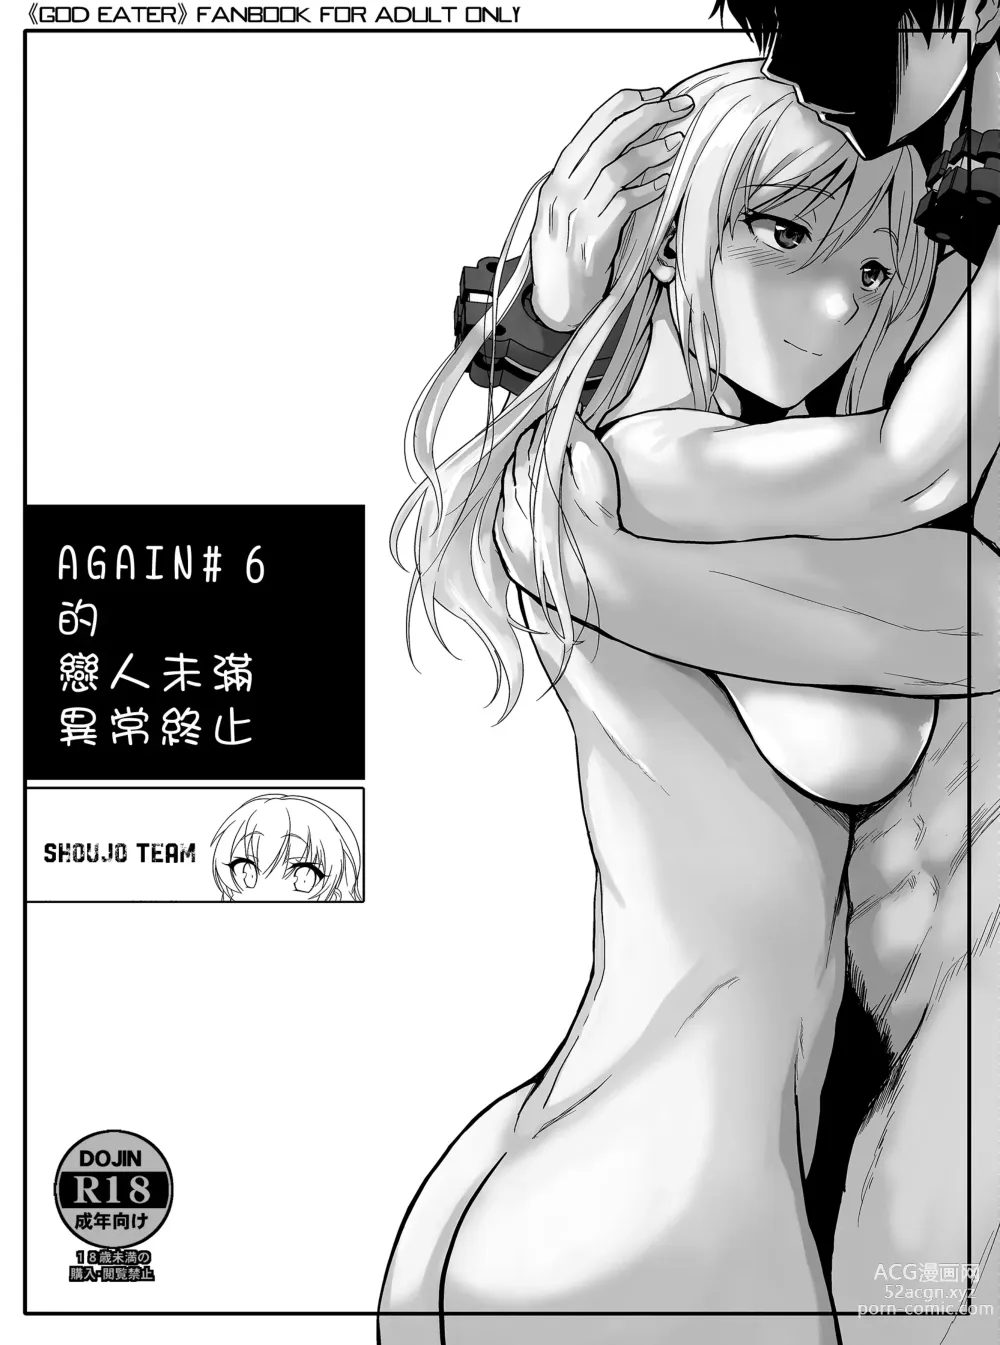 Page 1 of doujinshi AGAIN #6的戀人未滿異常終止